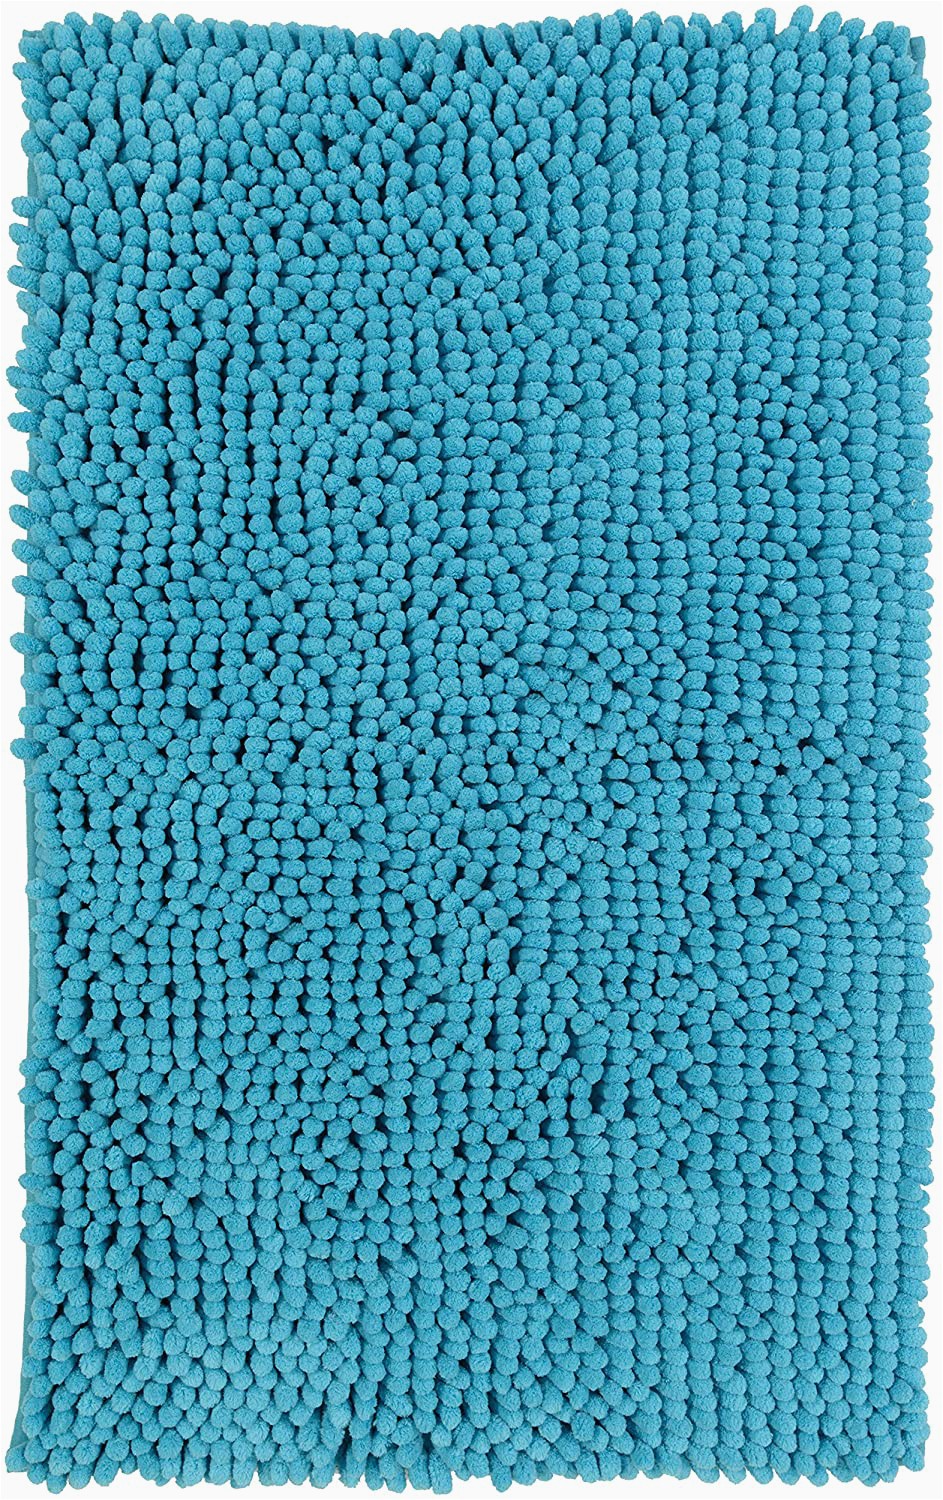 Aqua Colored Bathroom Rugs Amazon Mohawk Home Serenity Ocean Blue area Rug 1 8×2